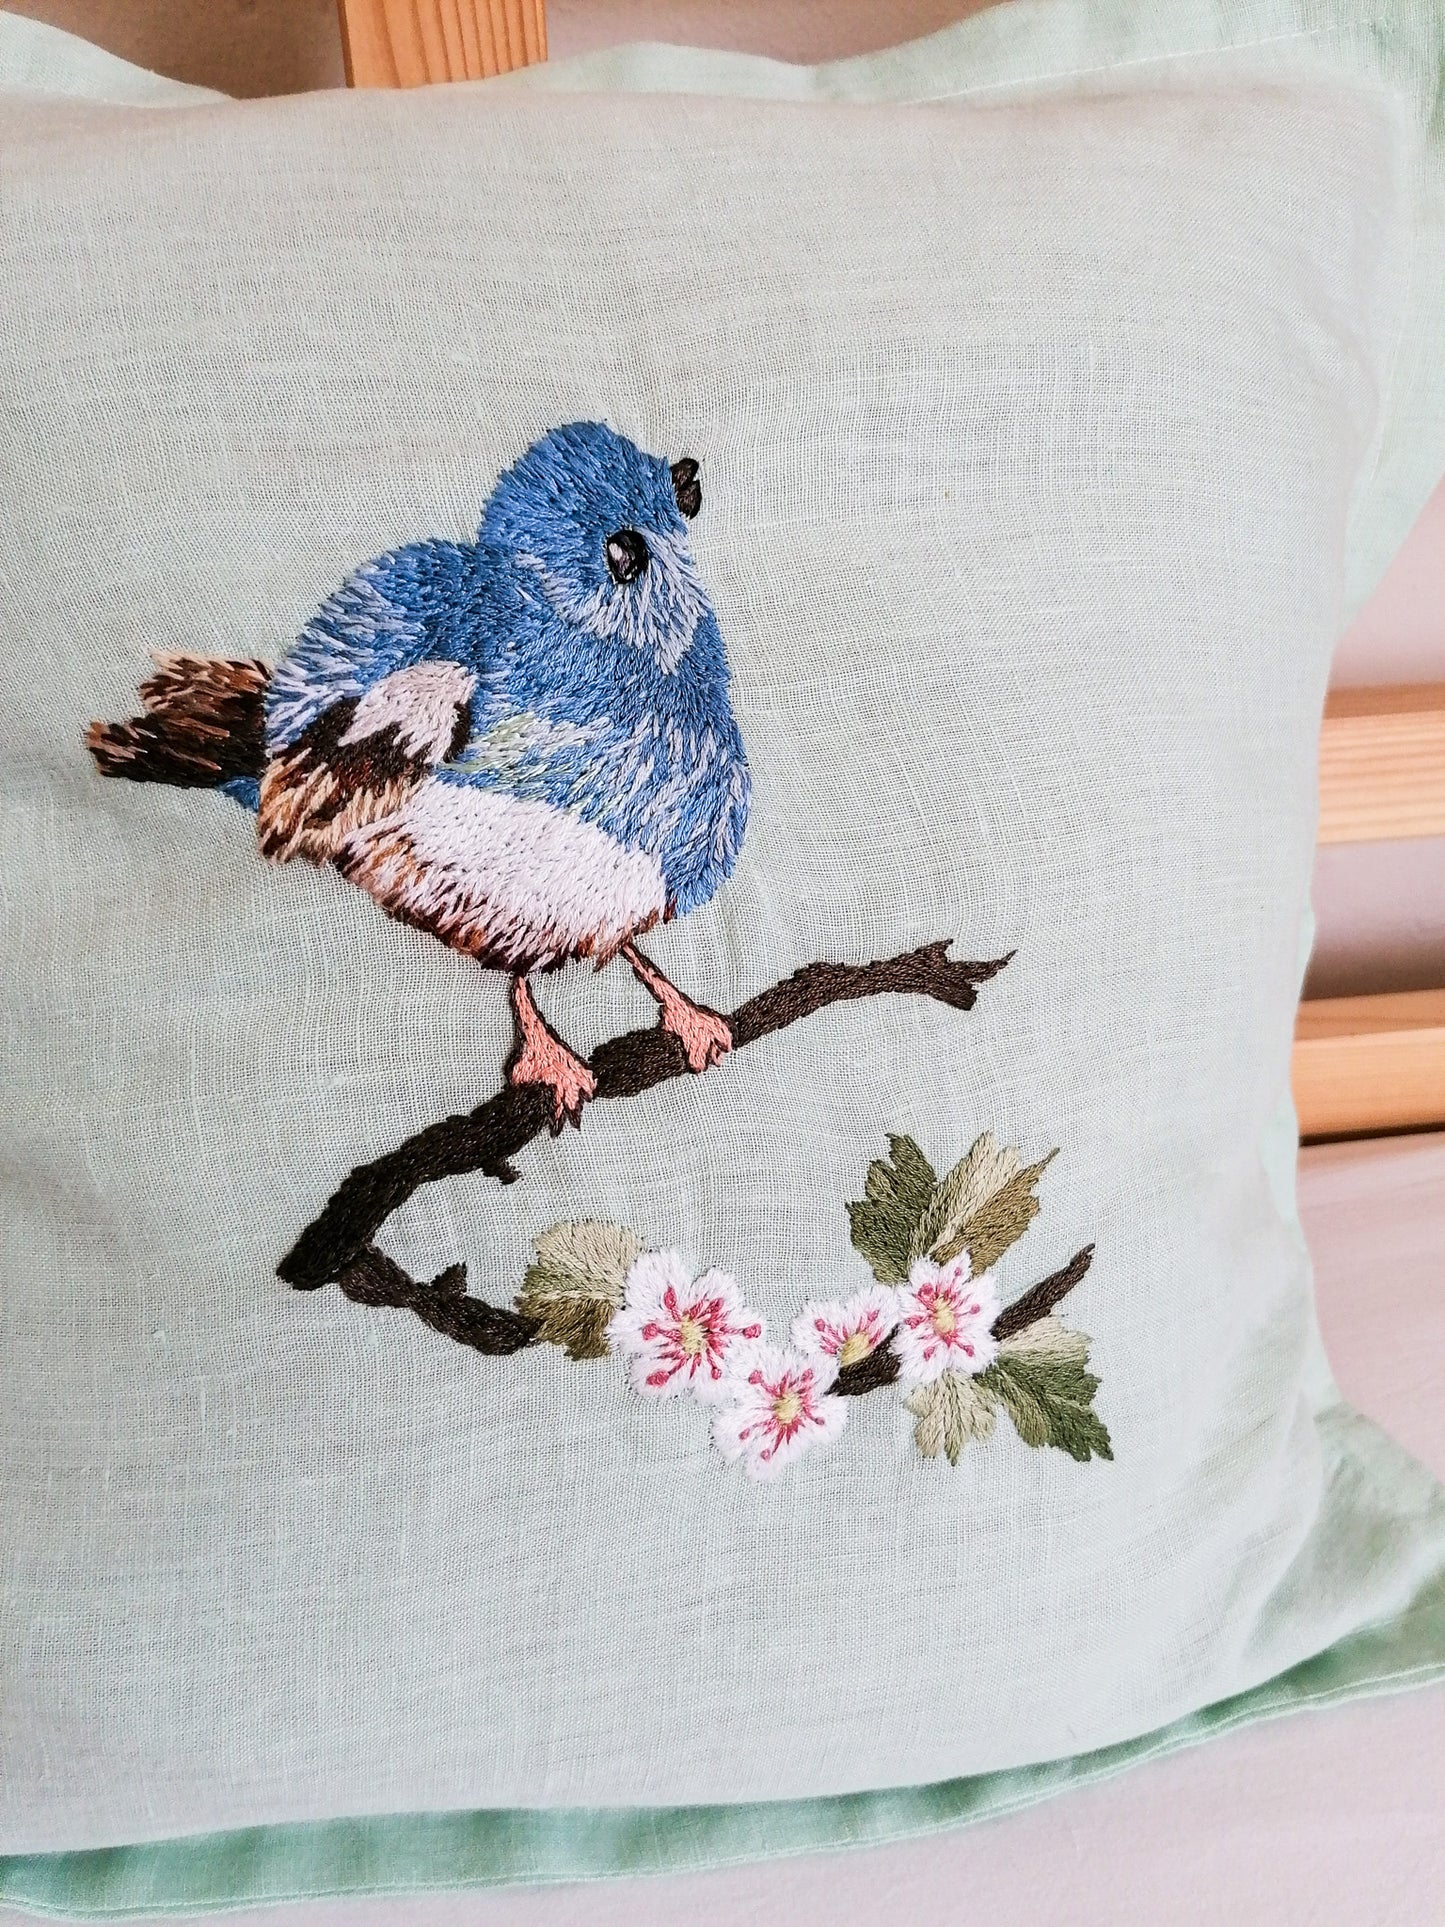 Embroidered blue bird pillowcase